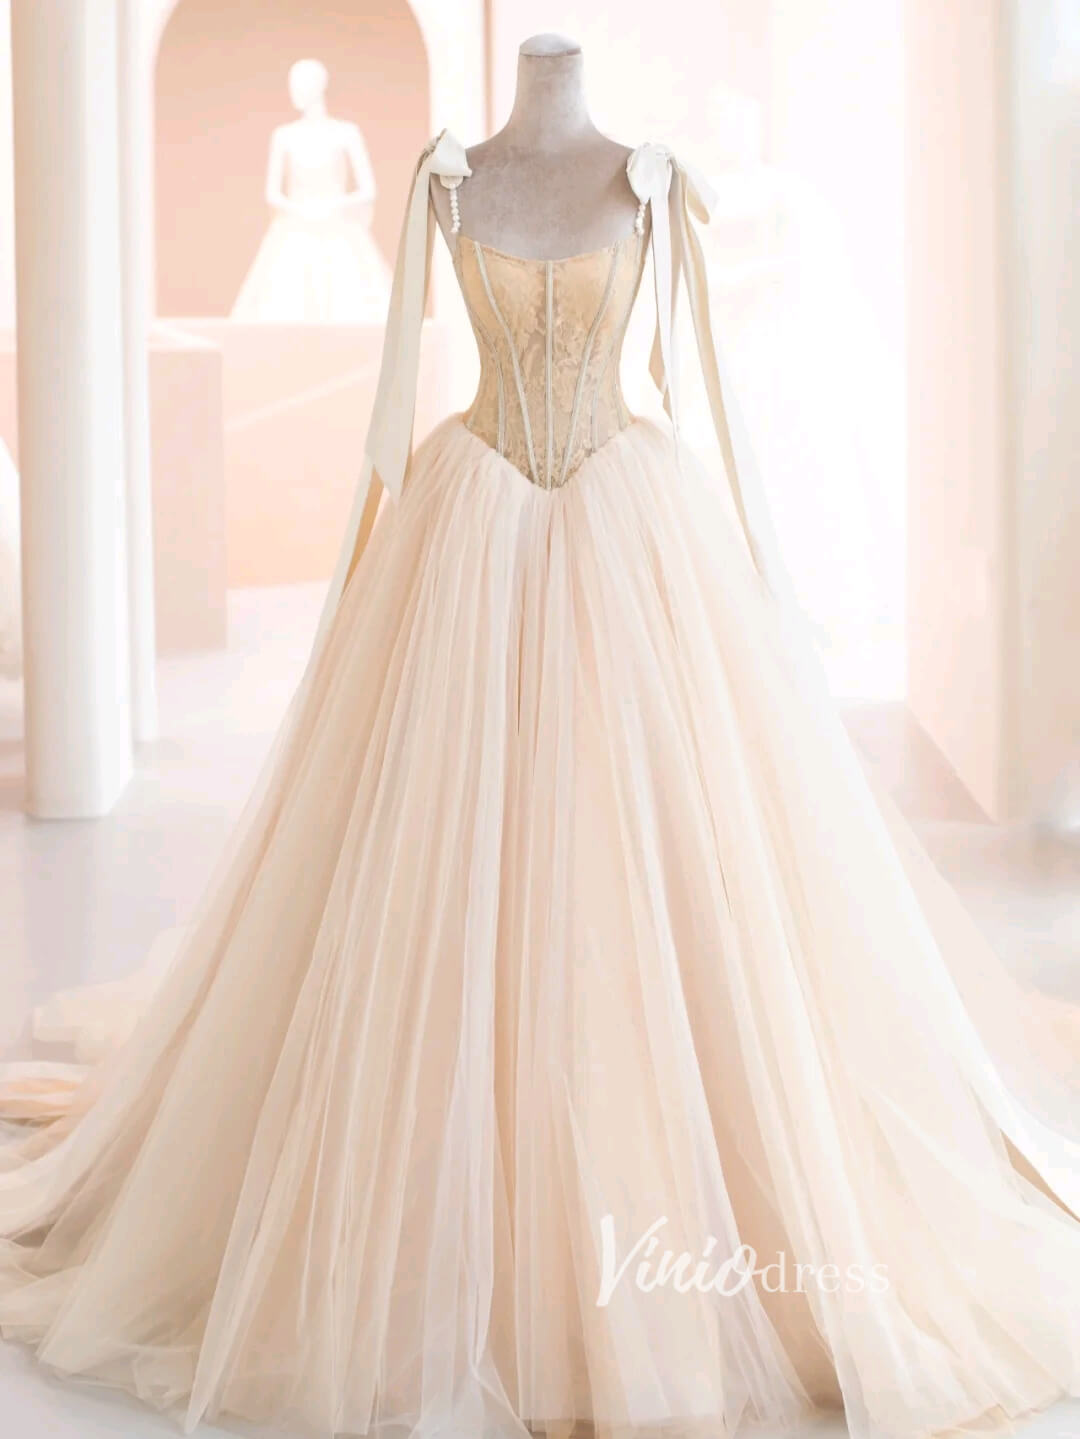 Champagne Tulle Prom Dresses Spaghetti Strap Formal Gown FD3432-prom dresses-Viniodress-Champagne-Custom Size-Viniodress